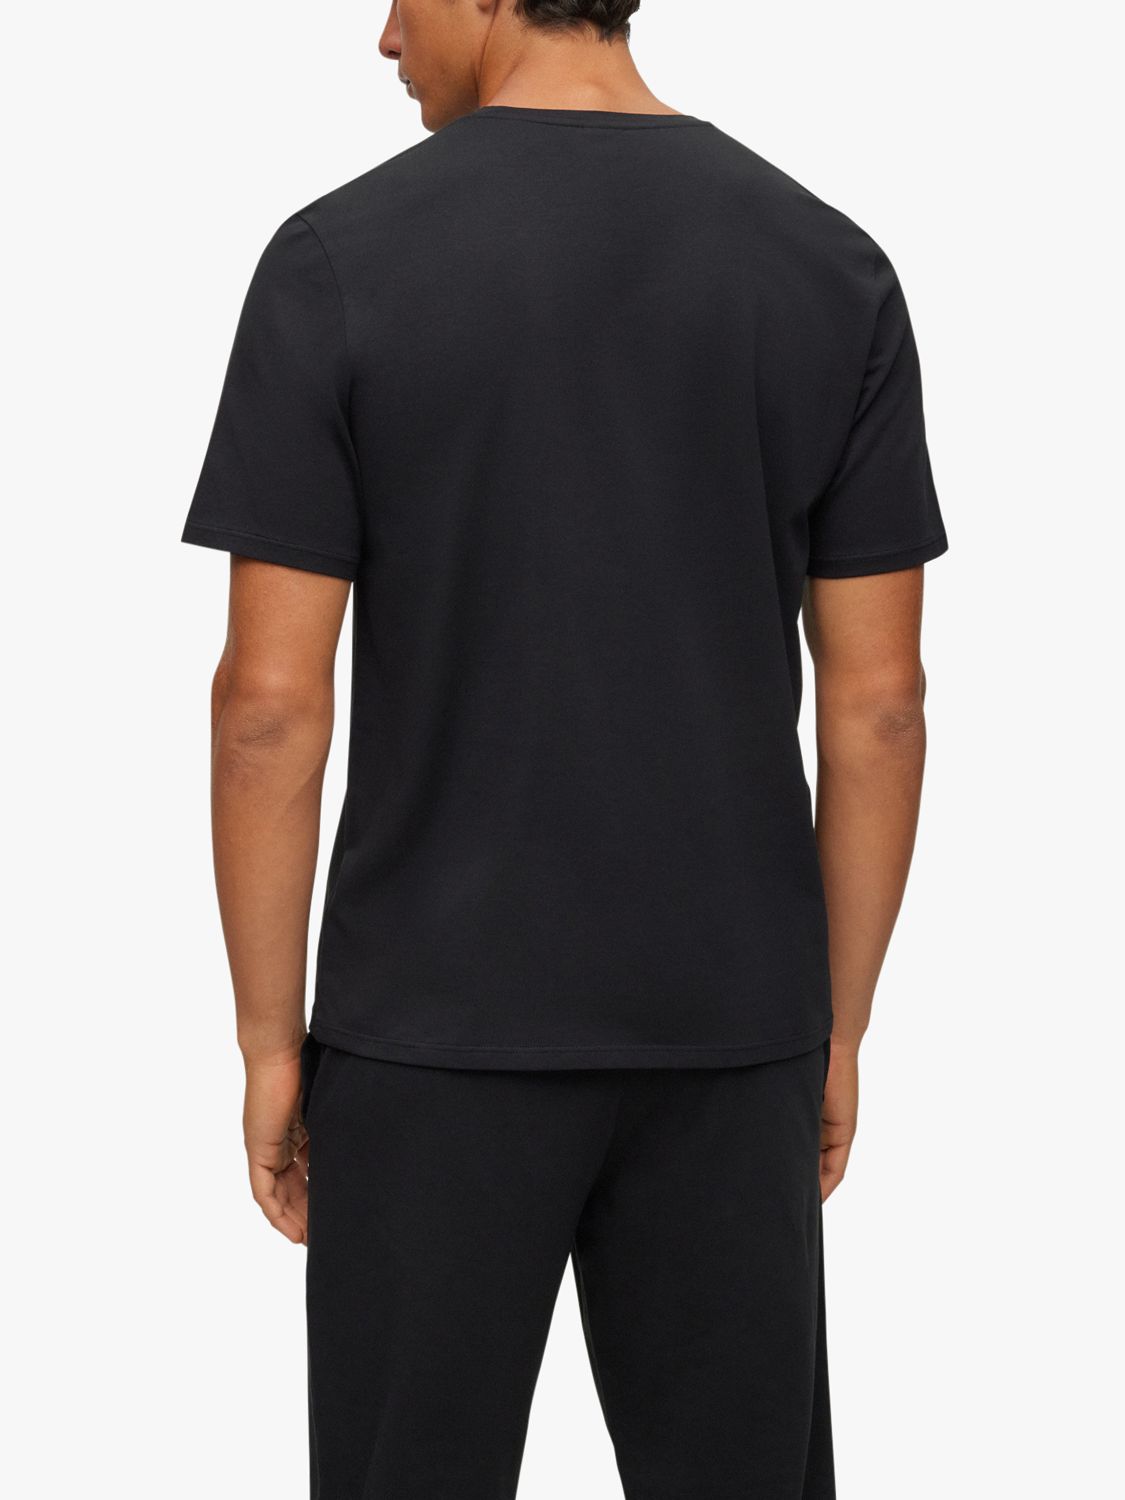 BOSS Unique Corporate Stripe T-Shirt, Black at John Lewis & Partners